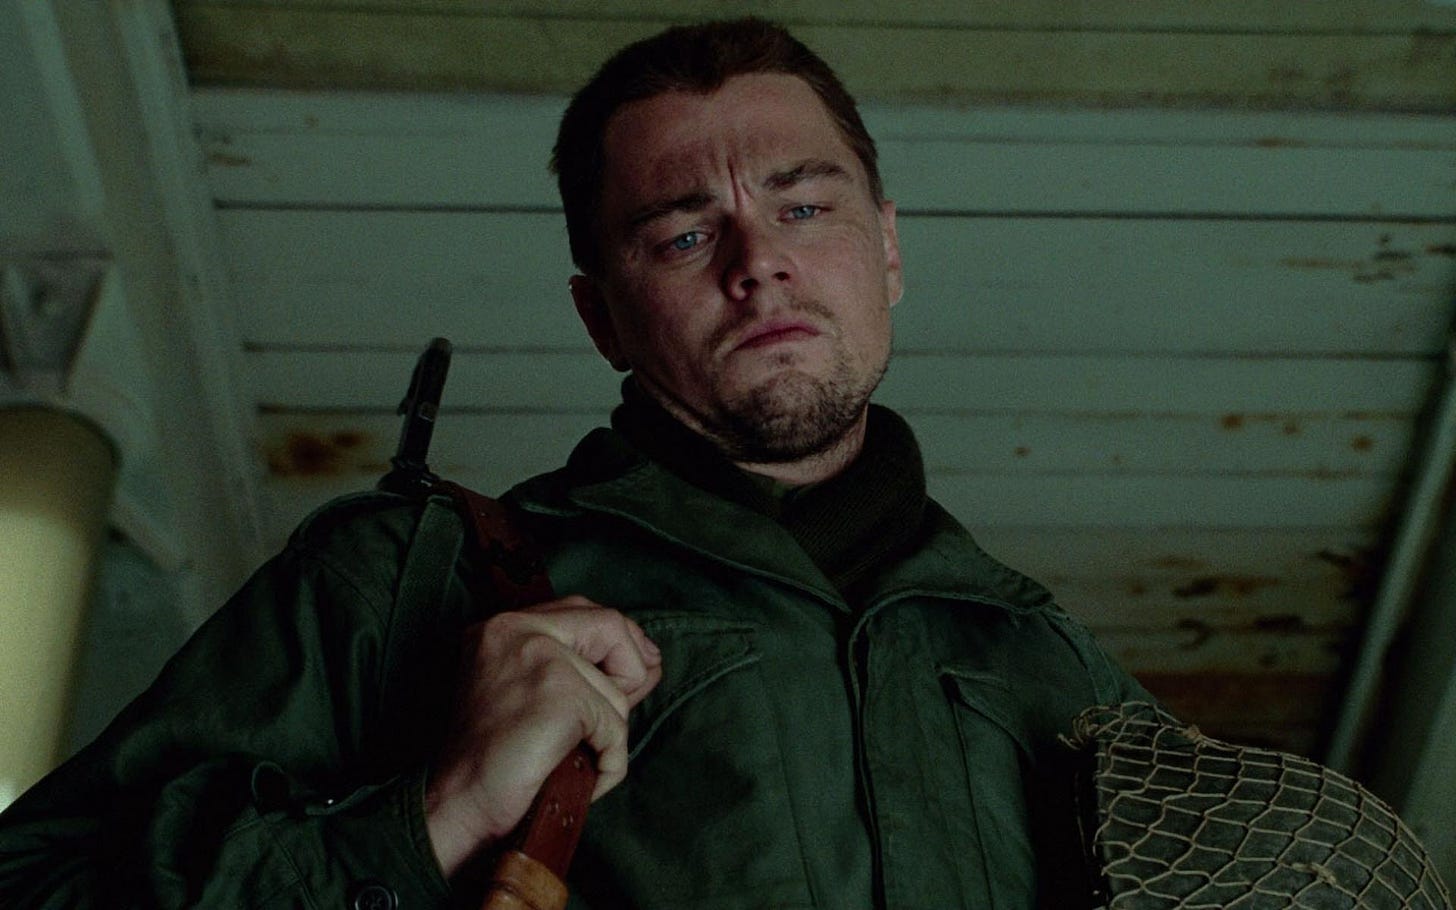 Leonardo DiCaprio in Shutter Island as a World War II Soldier.